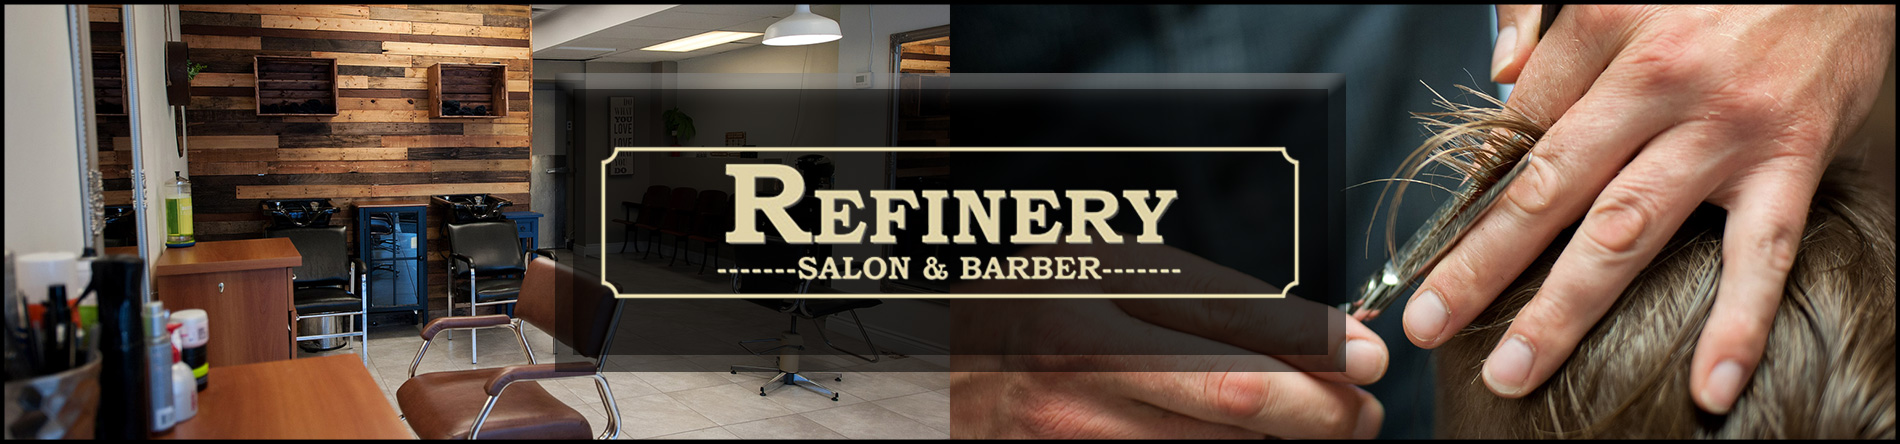 Refinery Salon and Barber